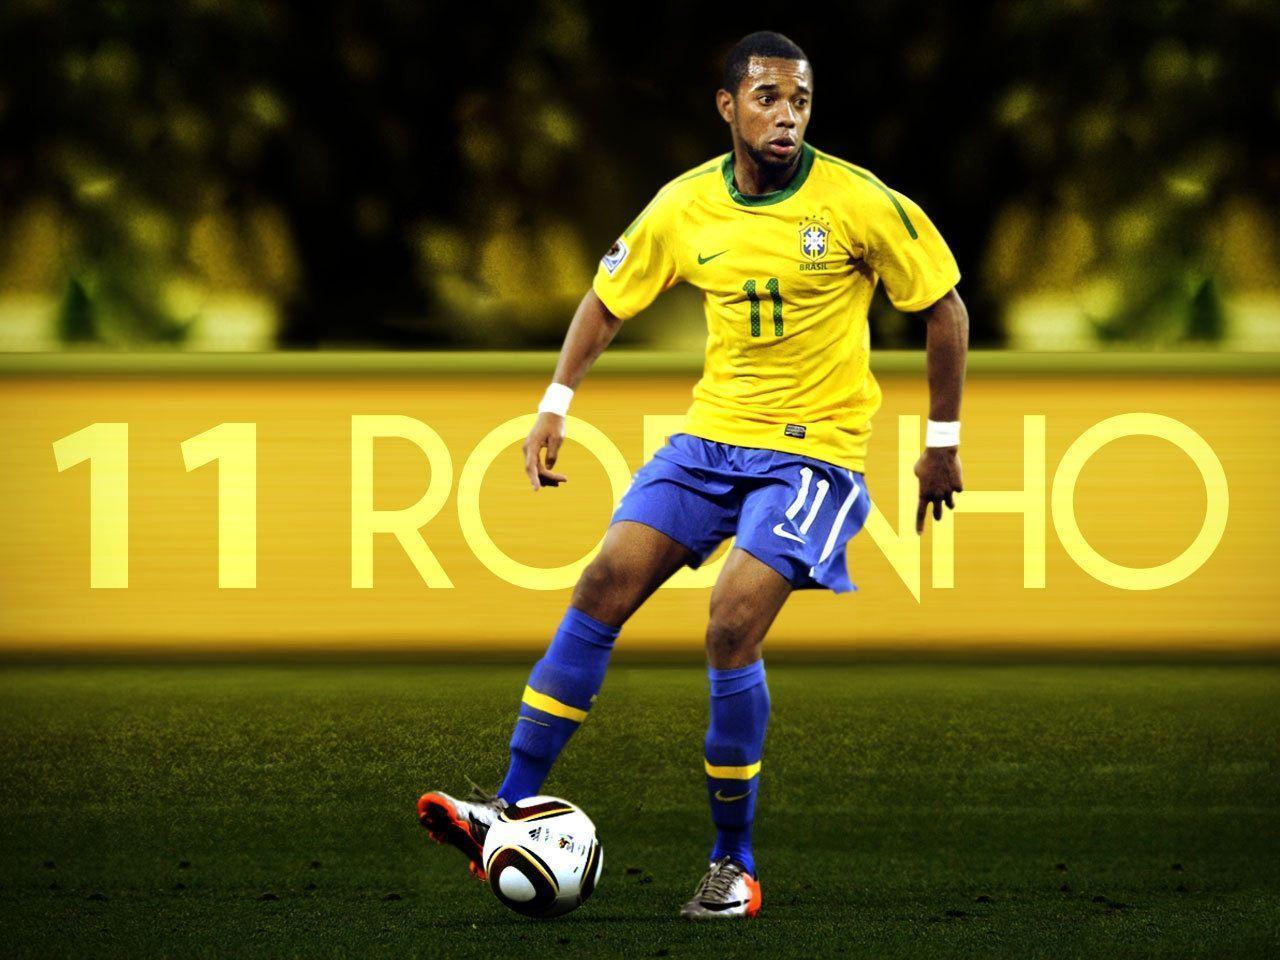 Robinho Fresh HD Wallpaper 2013. All Football Players HD